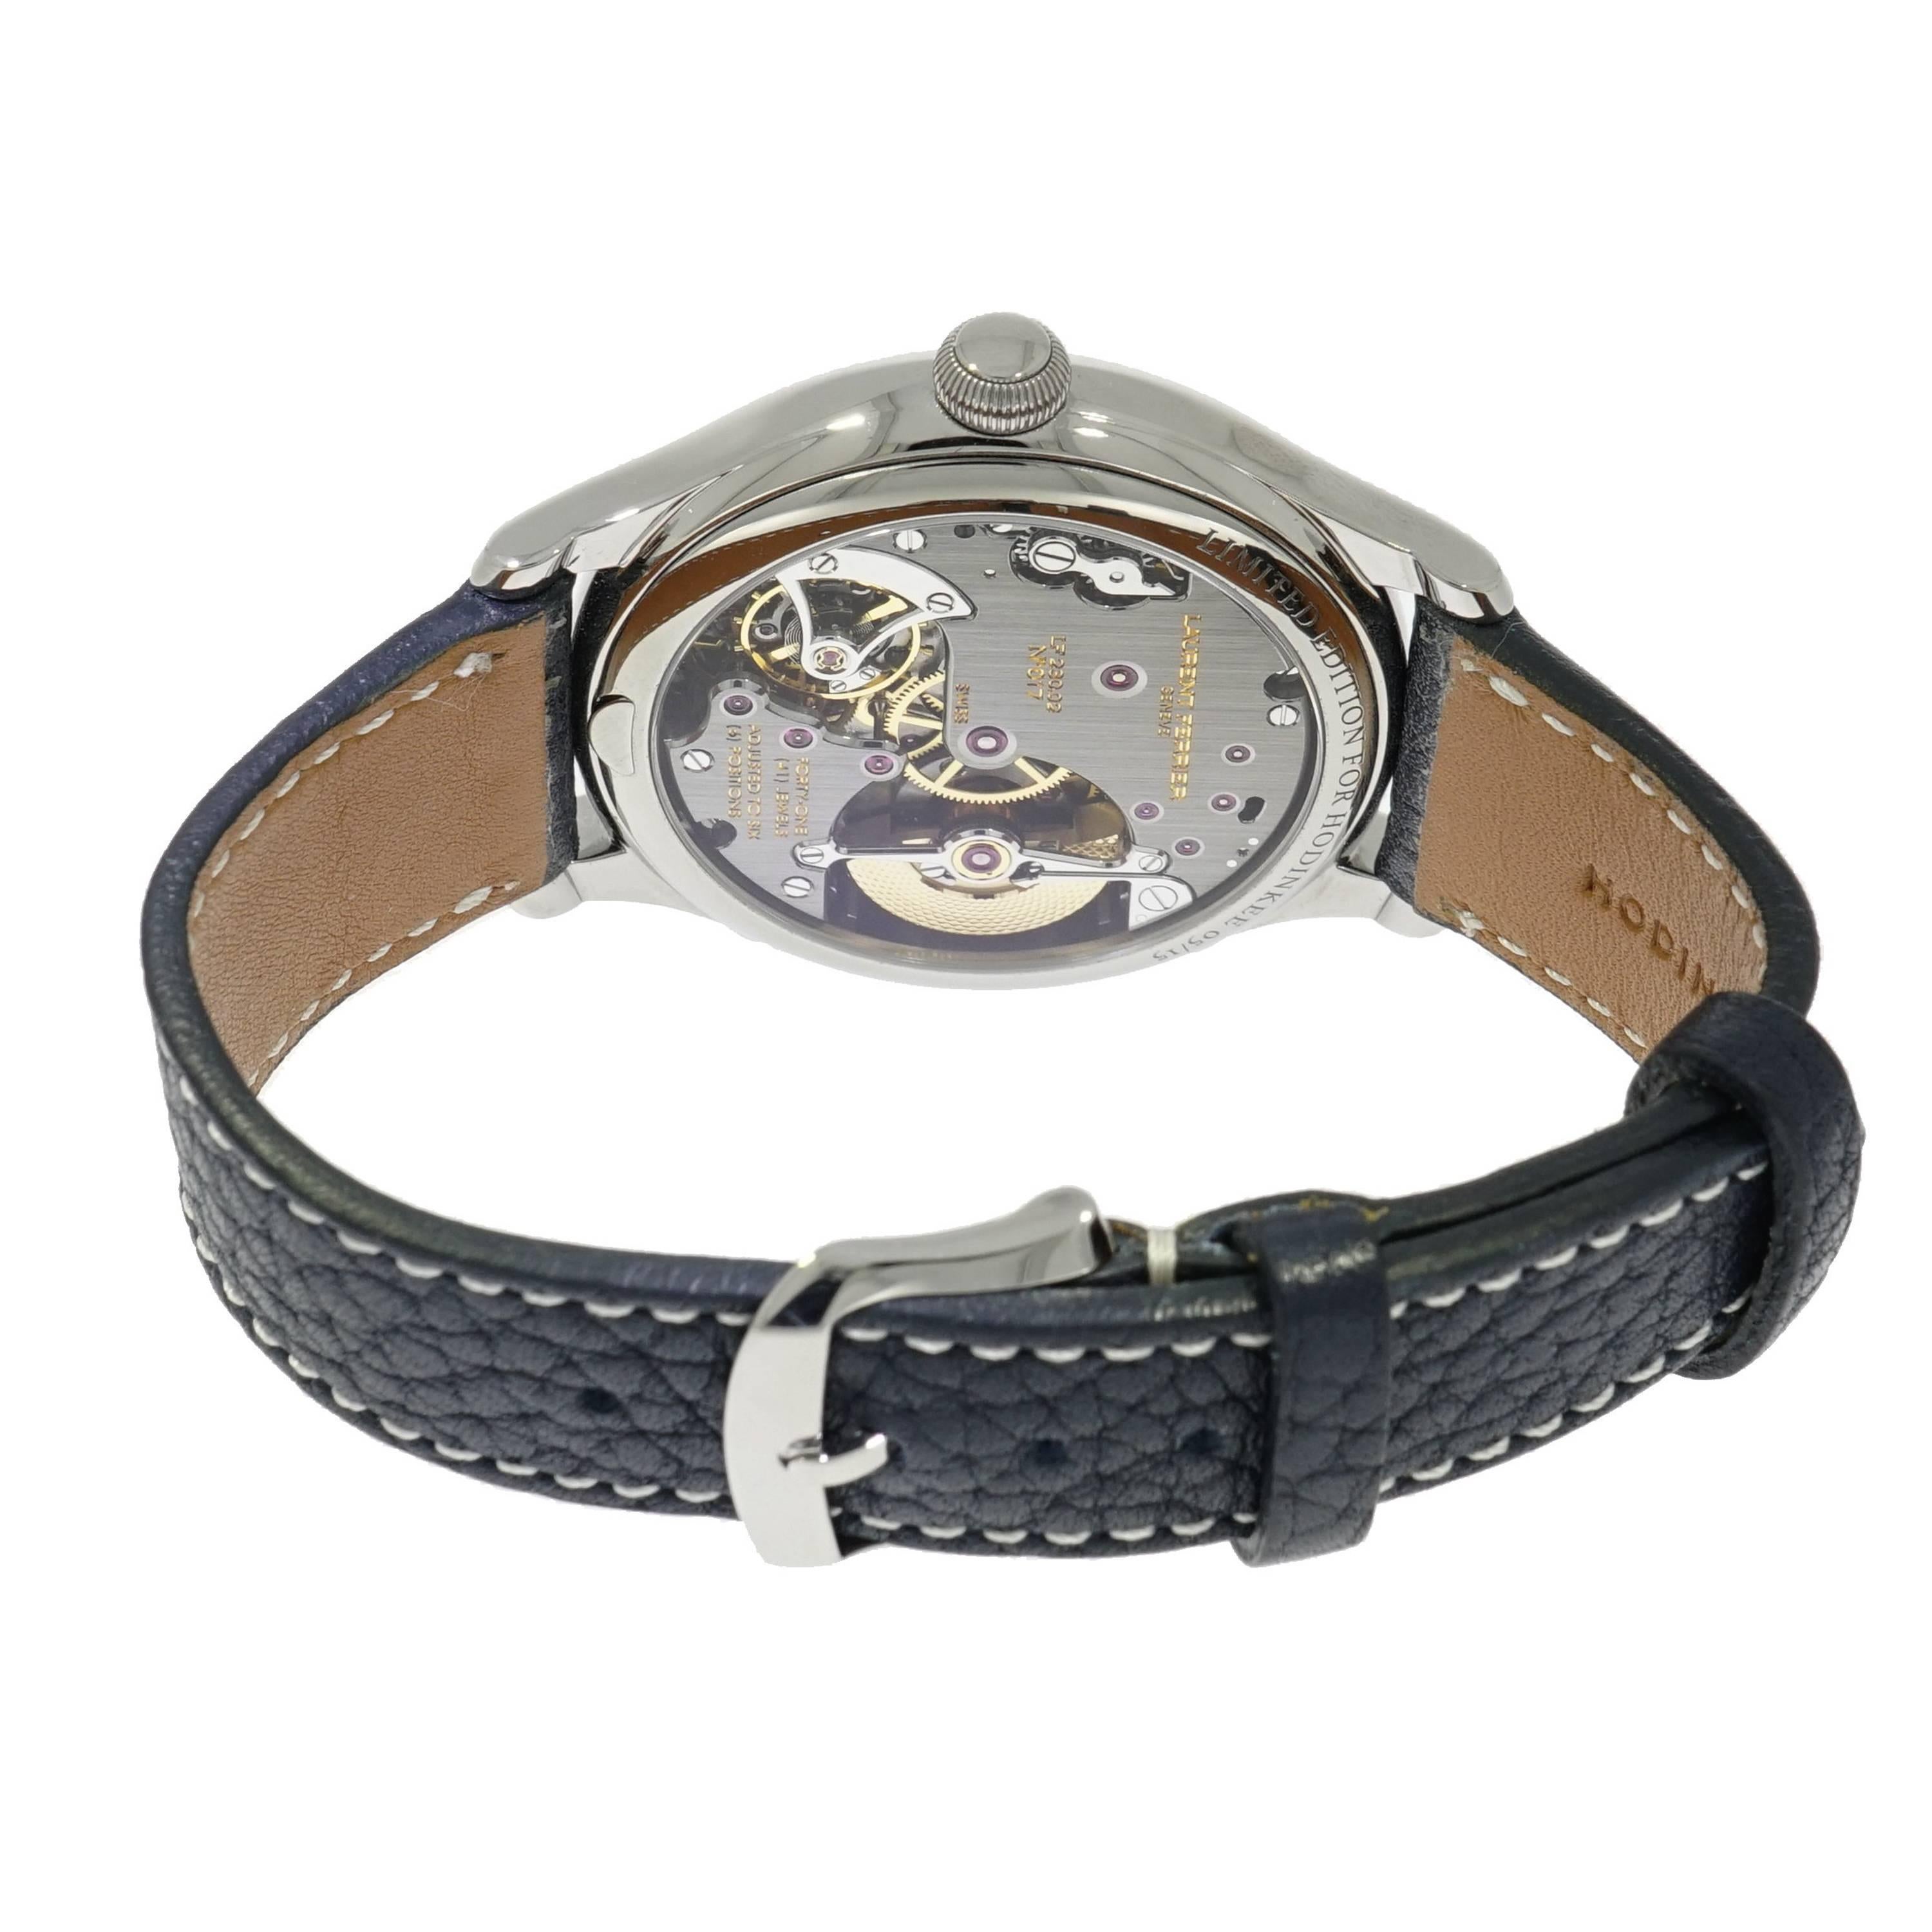 Modern Laurent Ferrier Titanium Galet Traveller Limited Edition Self-winding Wristwatch